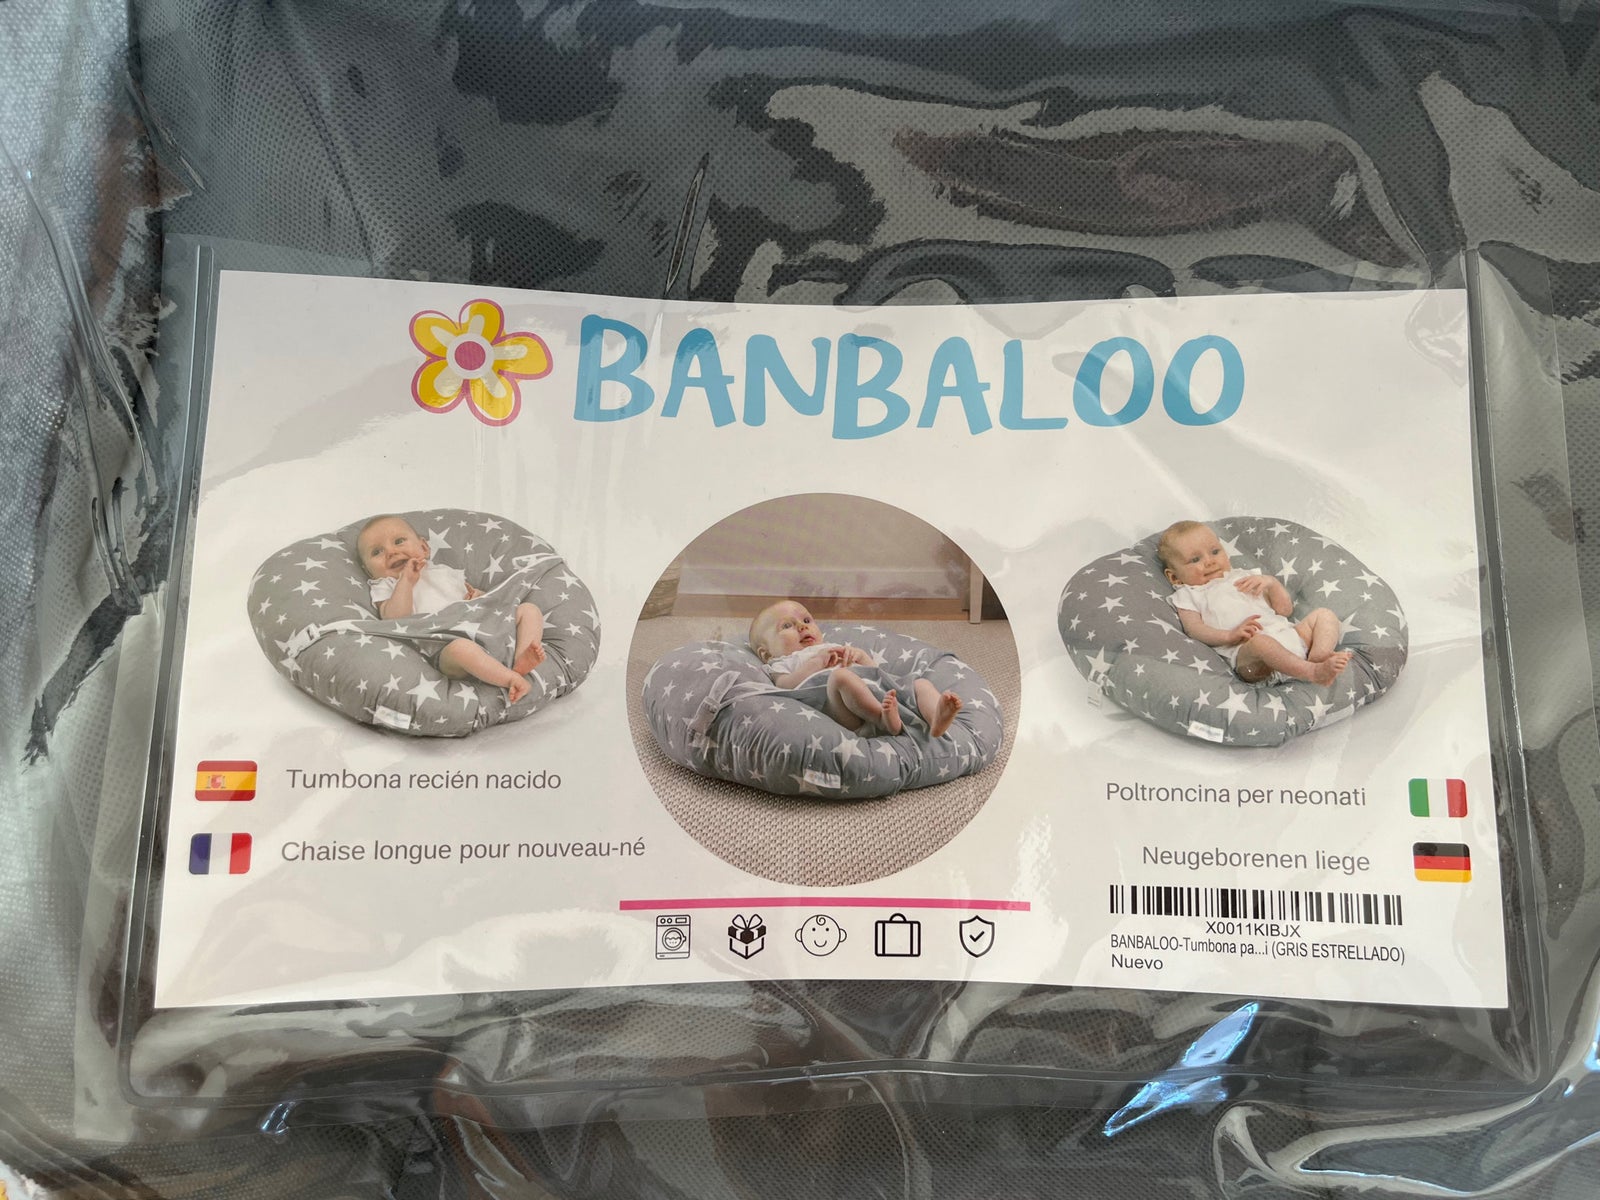 – Banbaloo